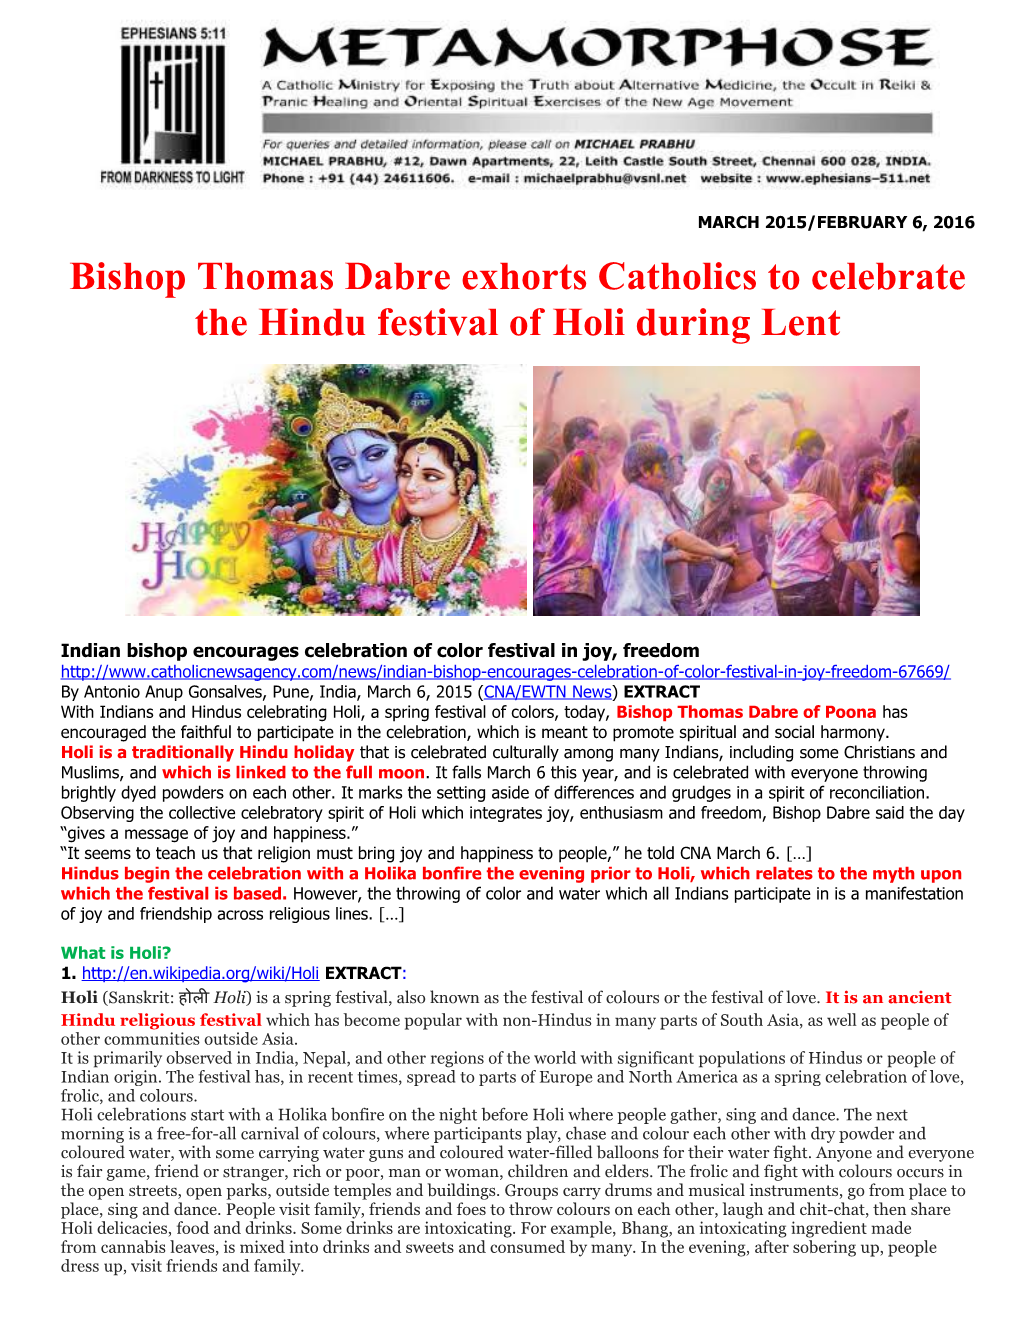 Bishop Thomas Dabre Exhorts Catholics to Celebrate the Hindu Festival of Holi During Lent